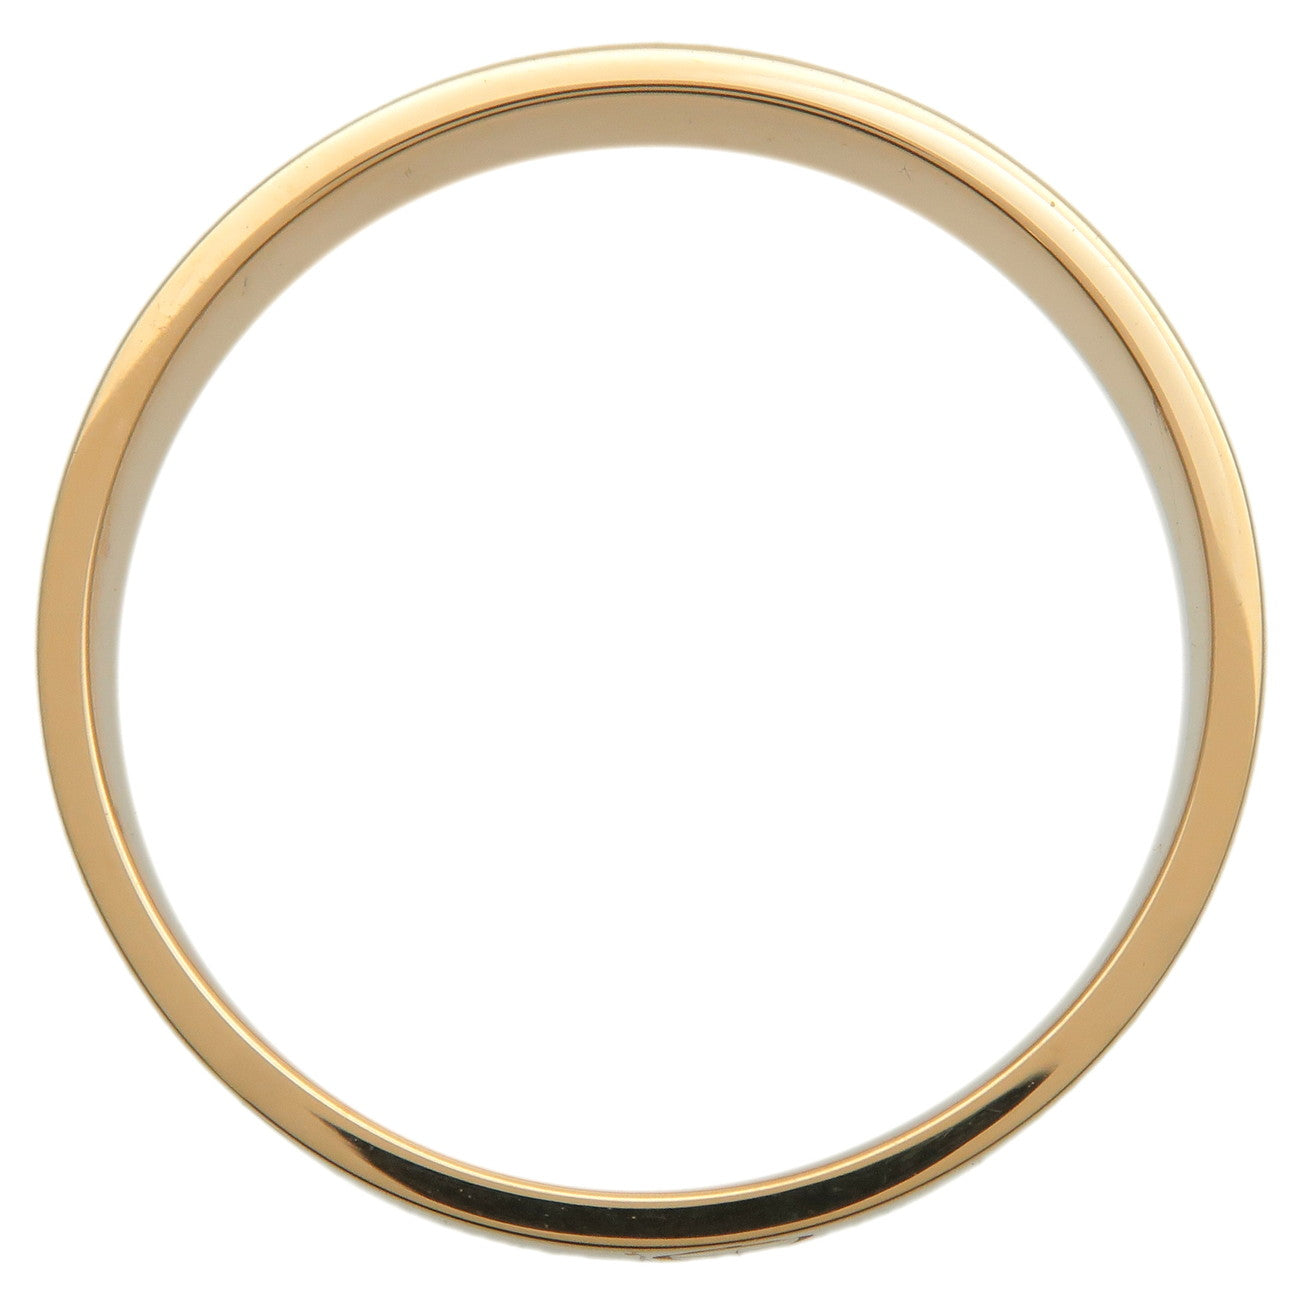 Cartier Mini Love Ring K18YG 750YG Yellow Gold #61 US9.5-10 EU61.5